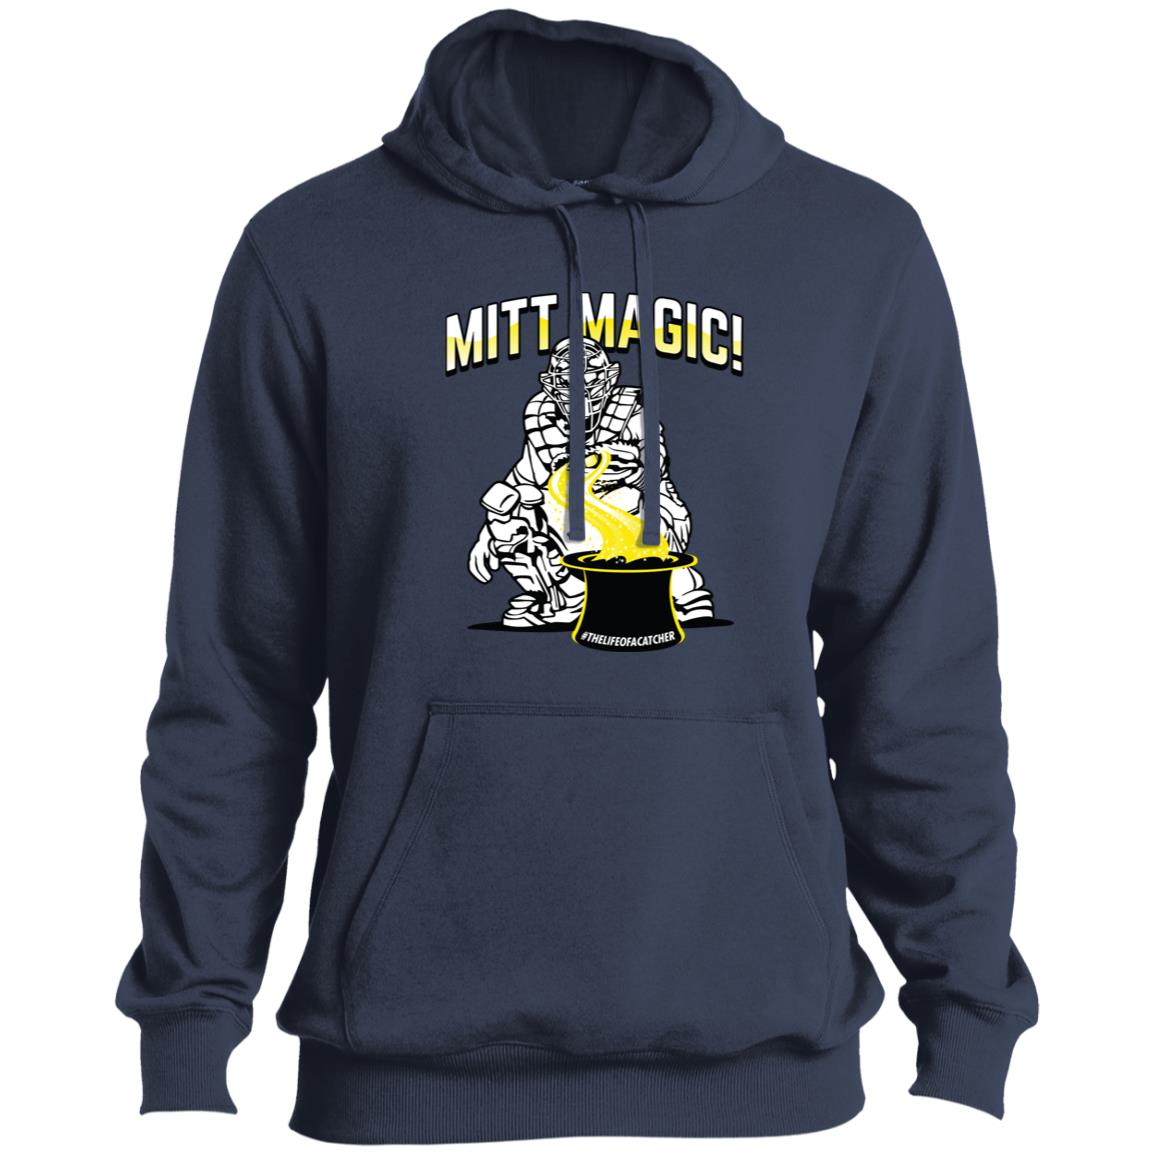 The Catching Guy Mitt Magic Pullover Hoodie navy